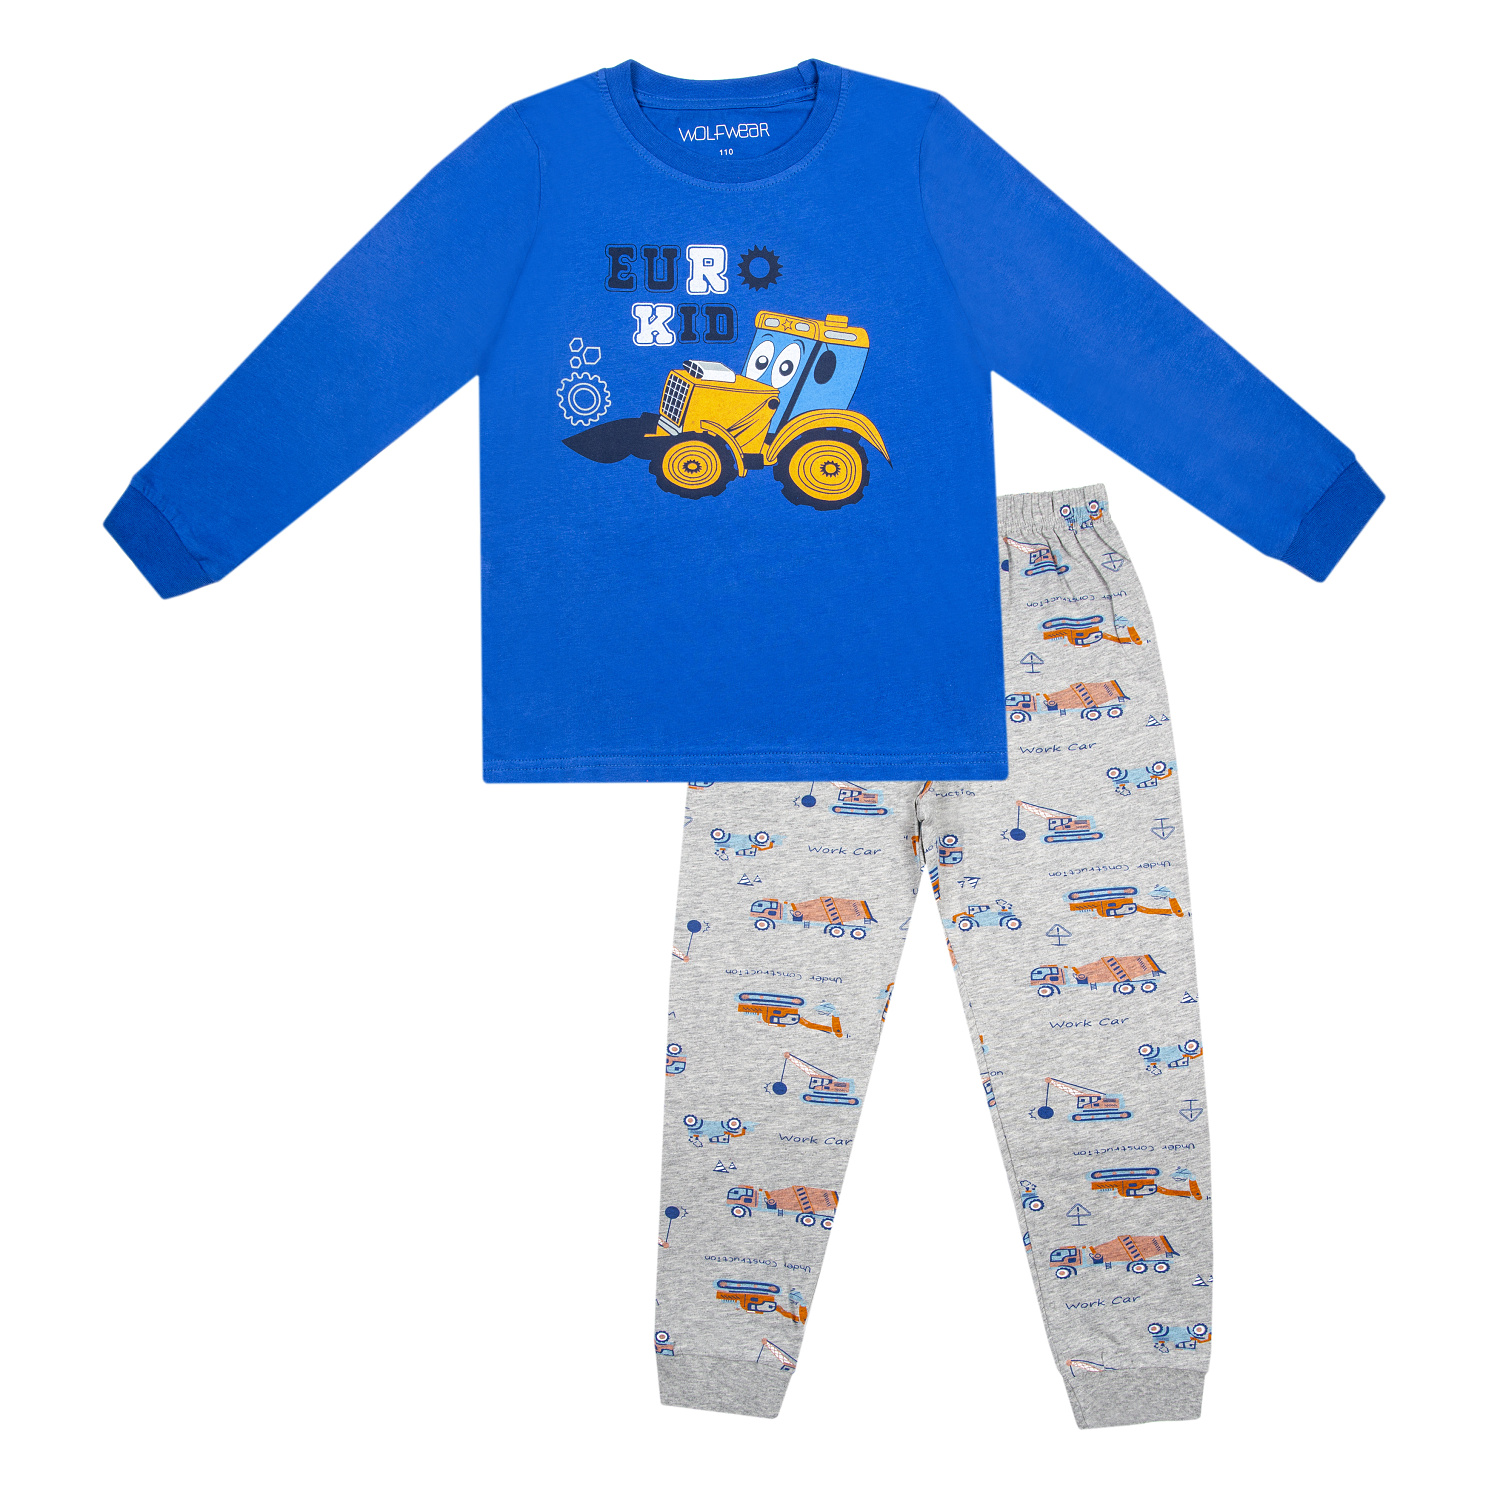 Chlapecké pyžamo - Wolf S2355B, modrá Barva: Modrá, Velikost: 104